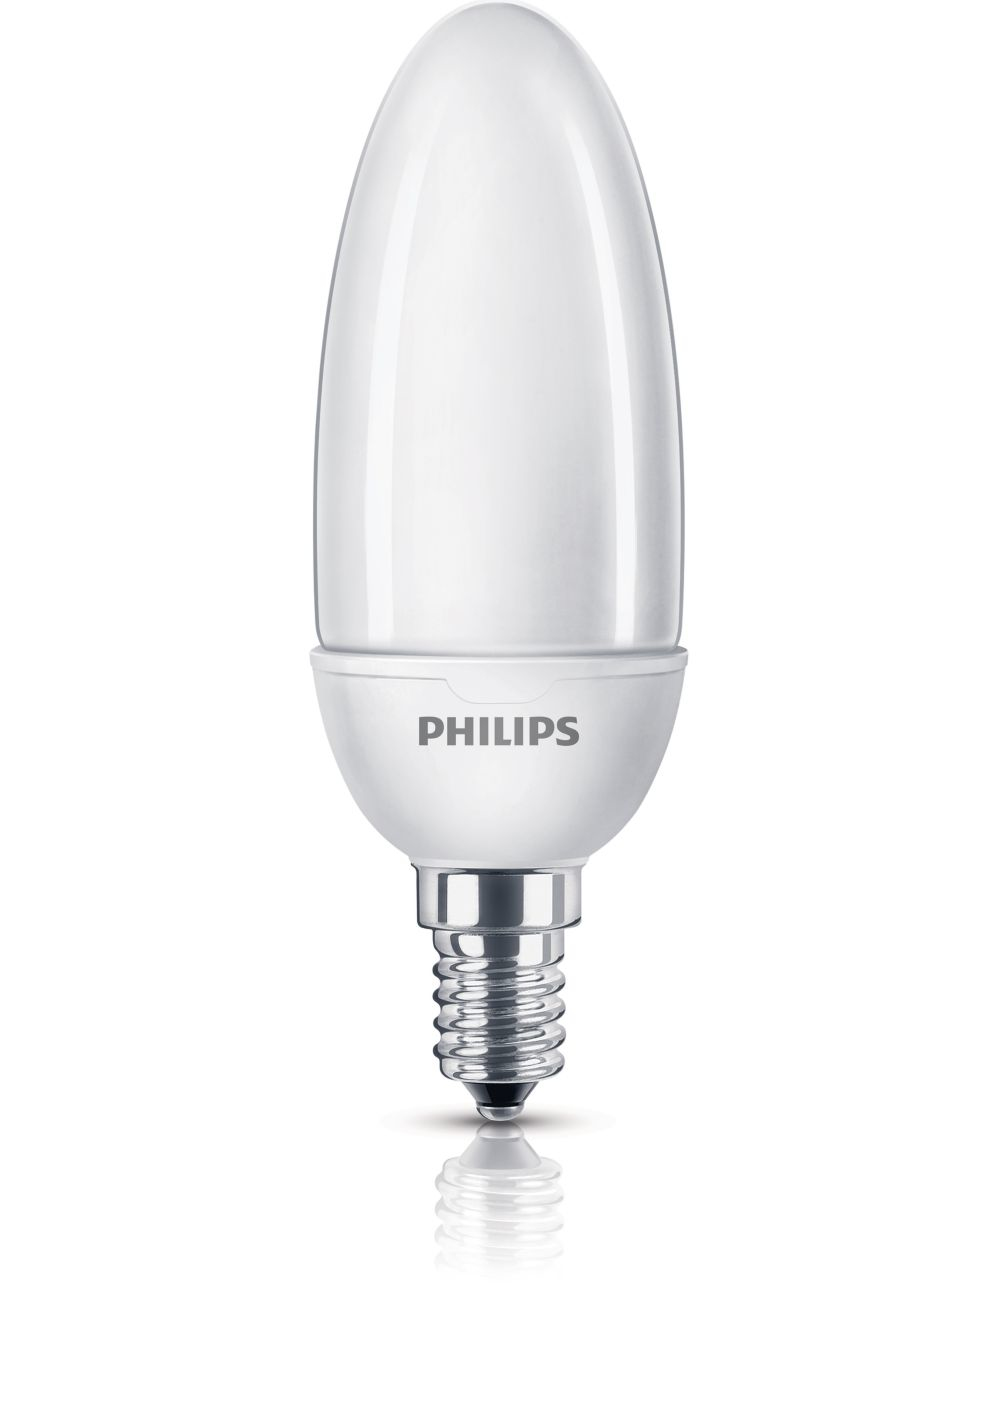 Image of Philips 2010085608